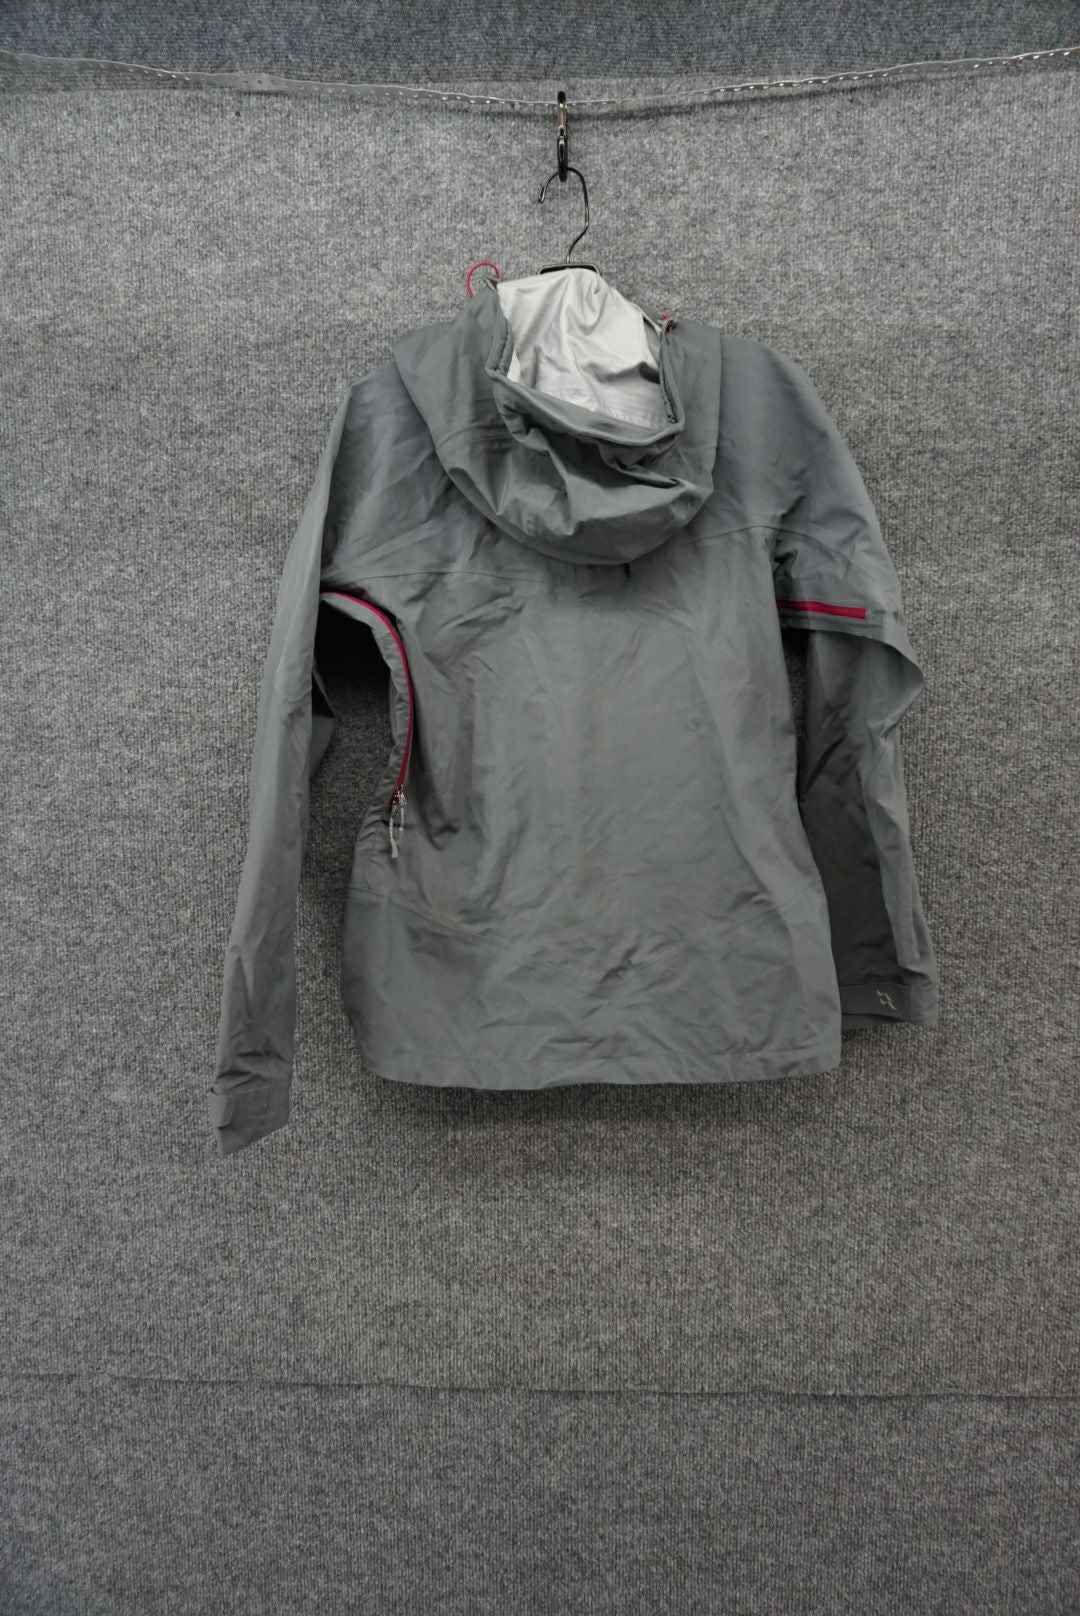 Rab Gray/Purple Size W Small Women's Softshell Jacket